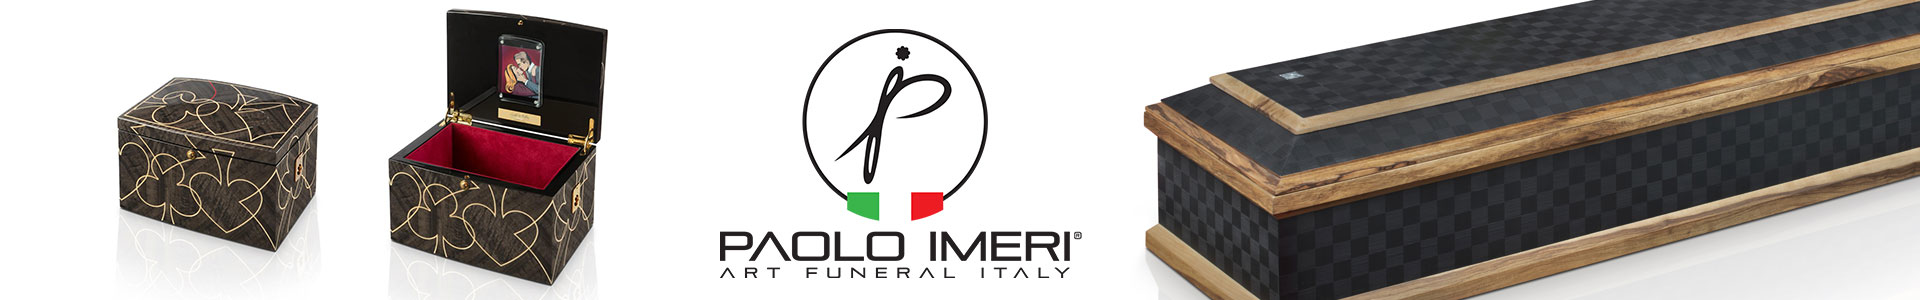 Paolo Imeri - Art Funeral Italy